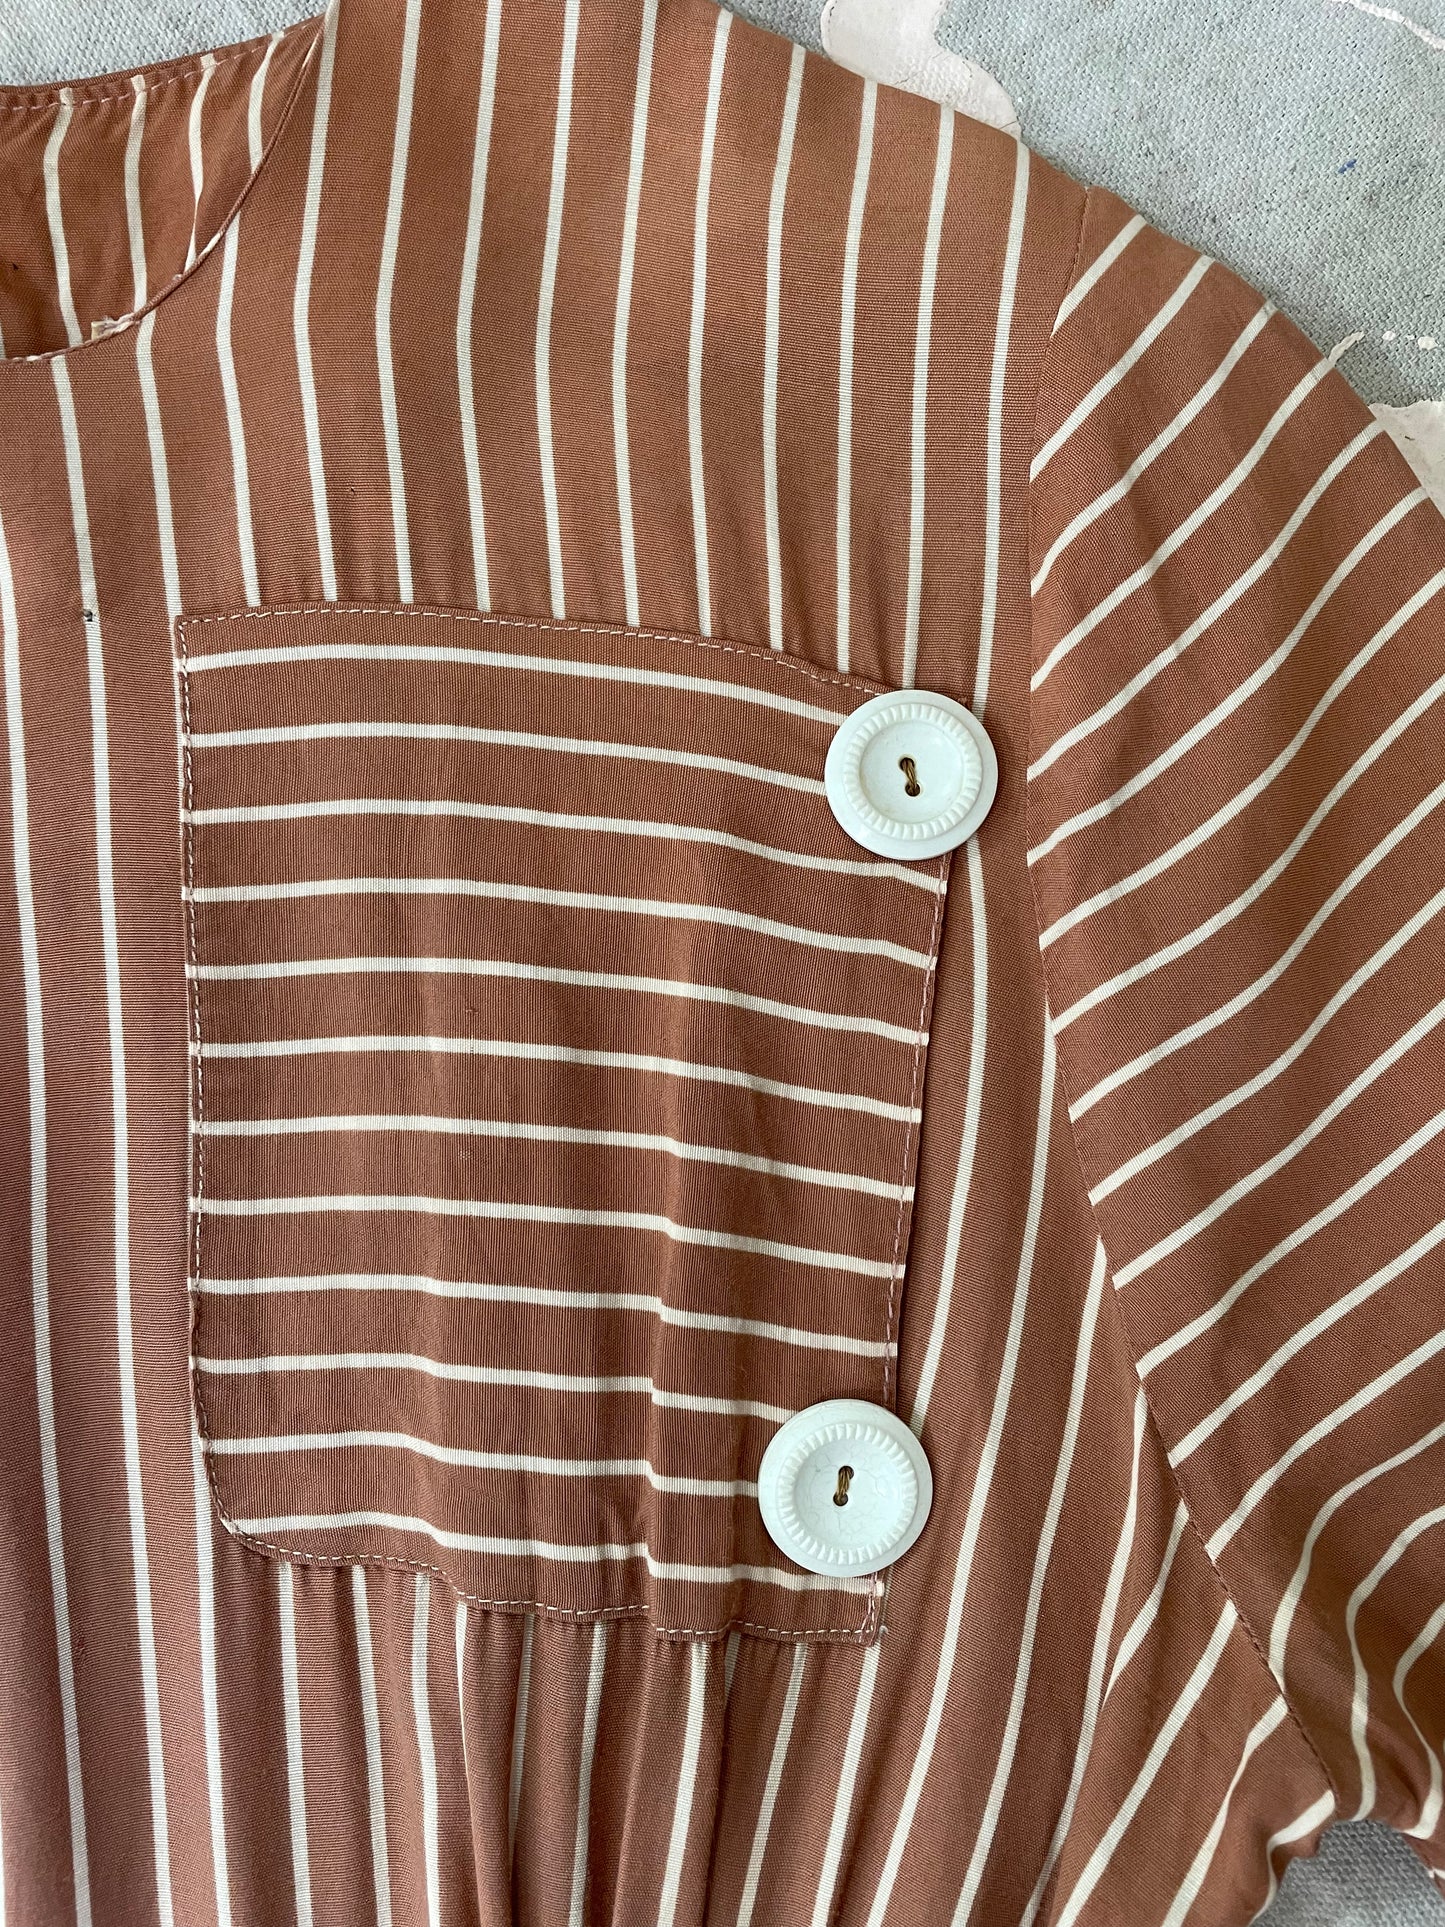 50s Striped Rayon Dress